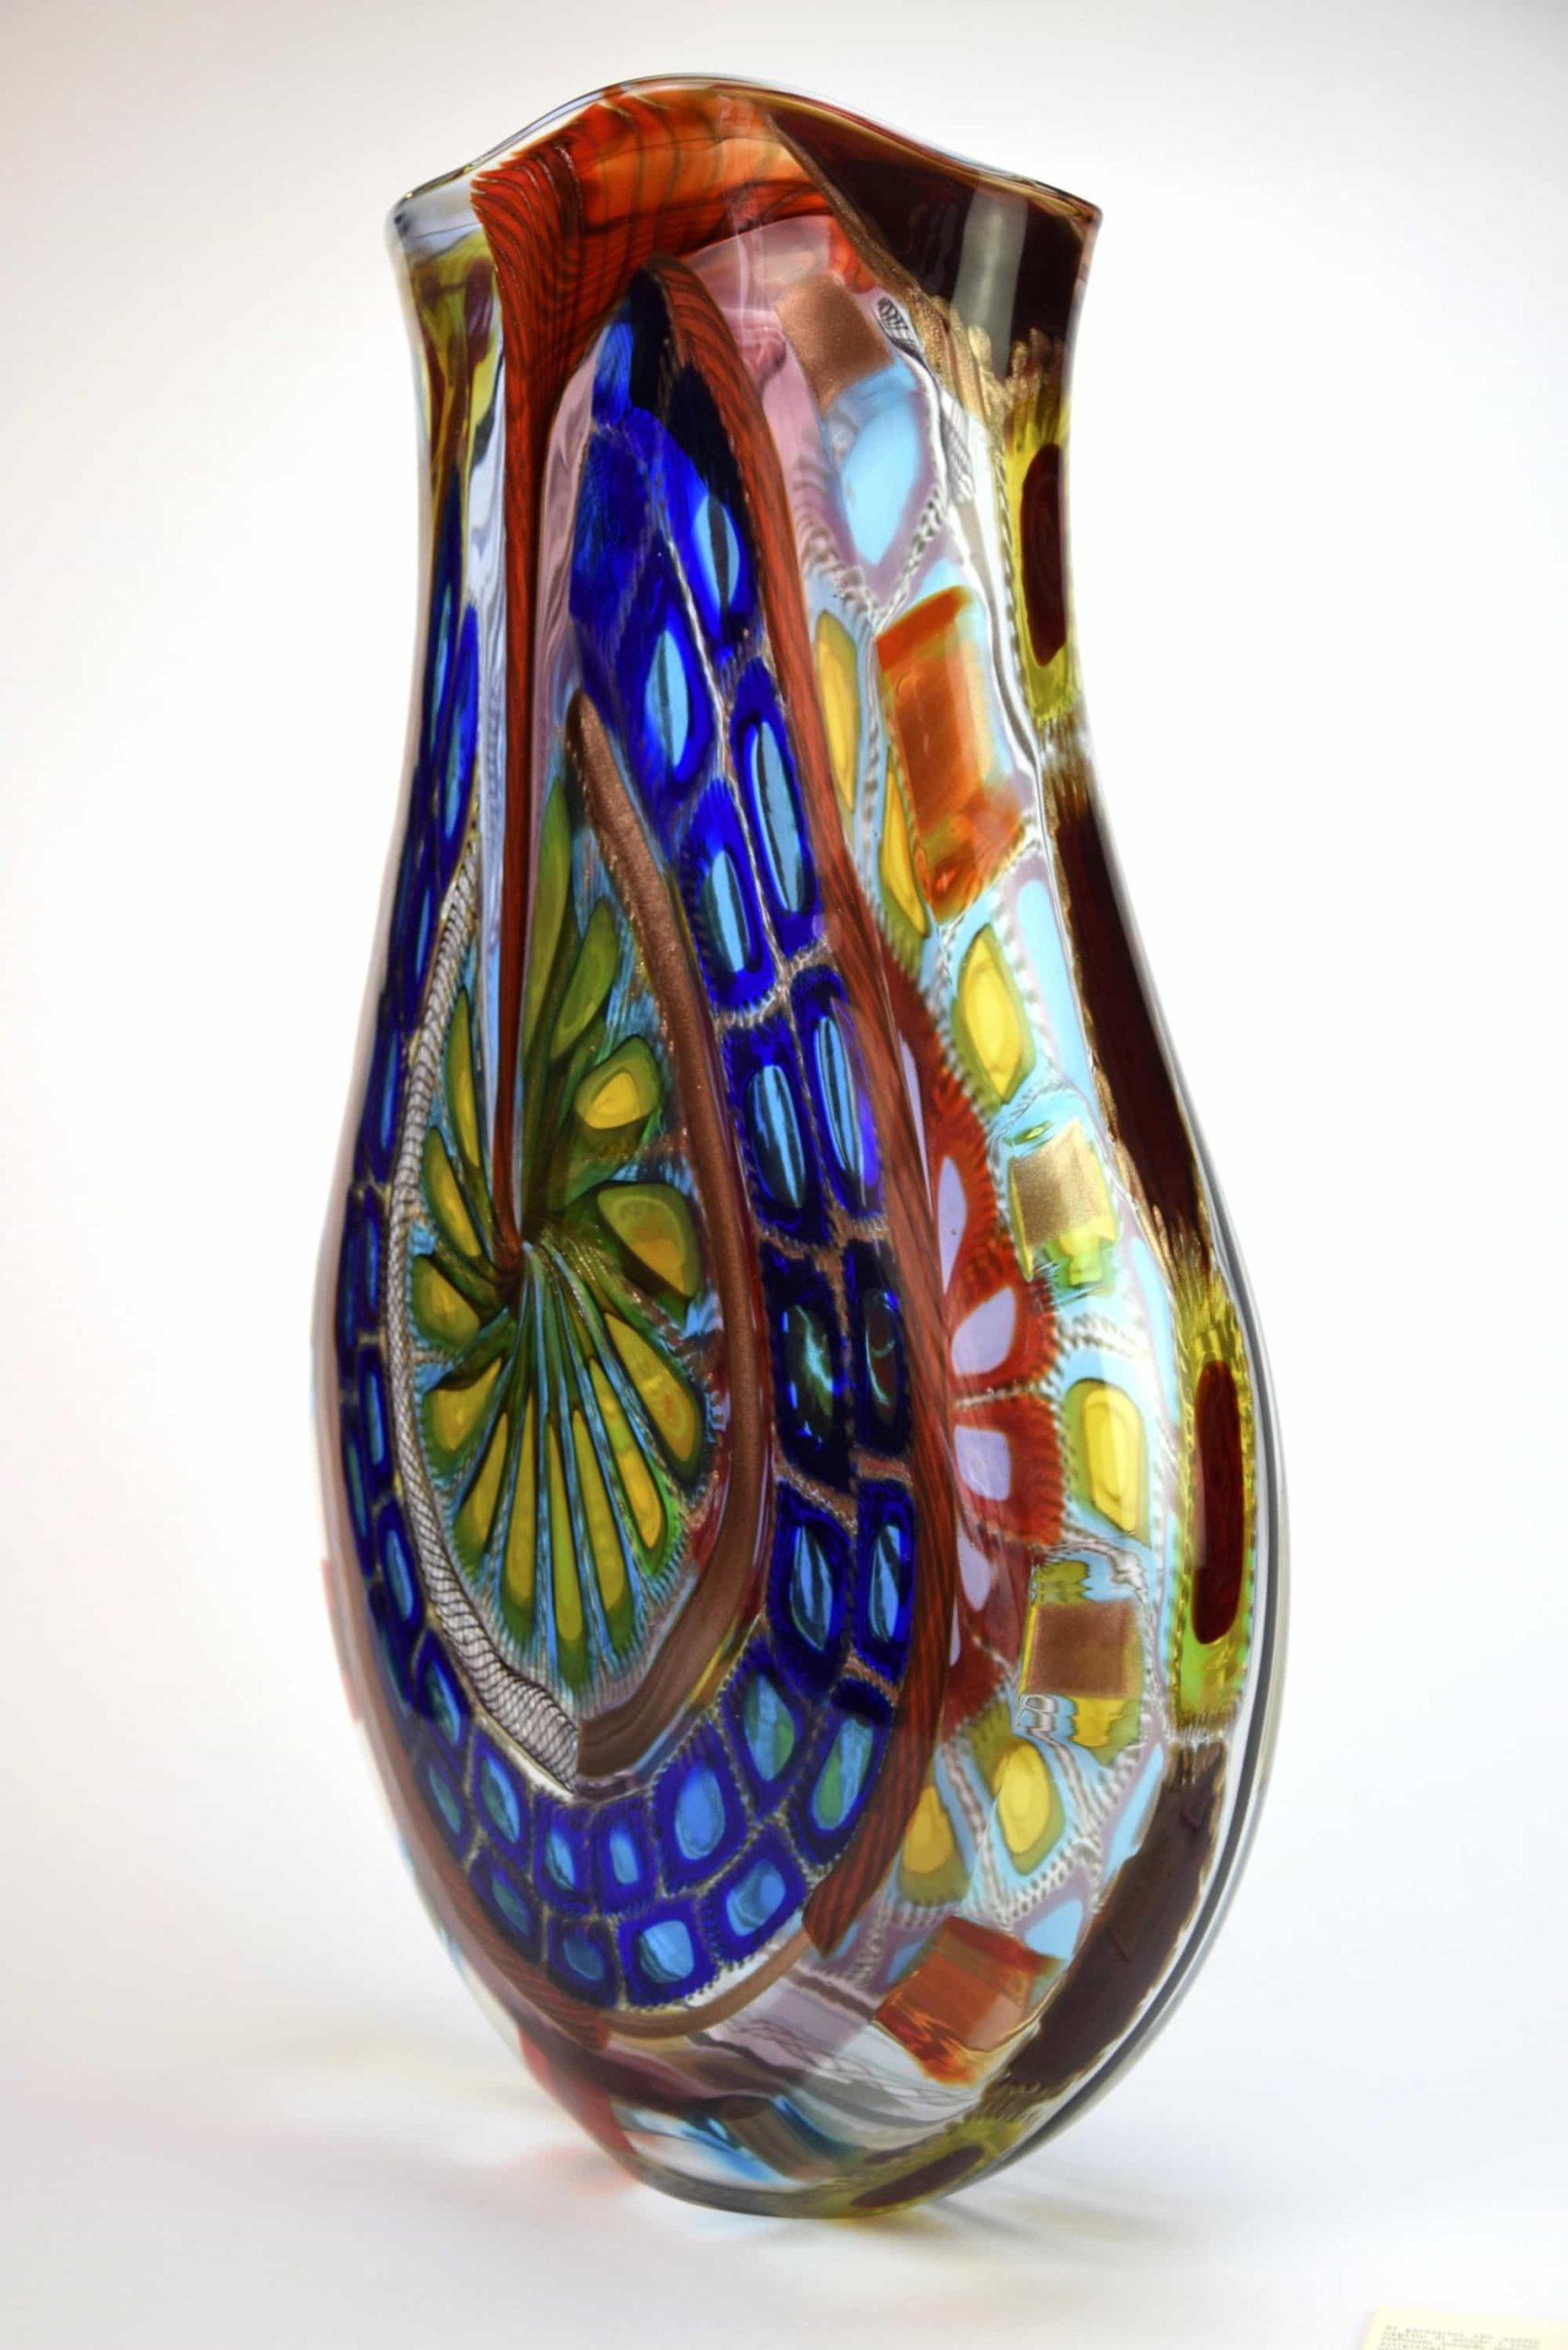 Unique Artistic Murano Glass Vase (Art. 2504)